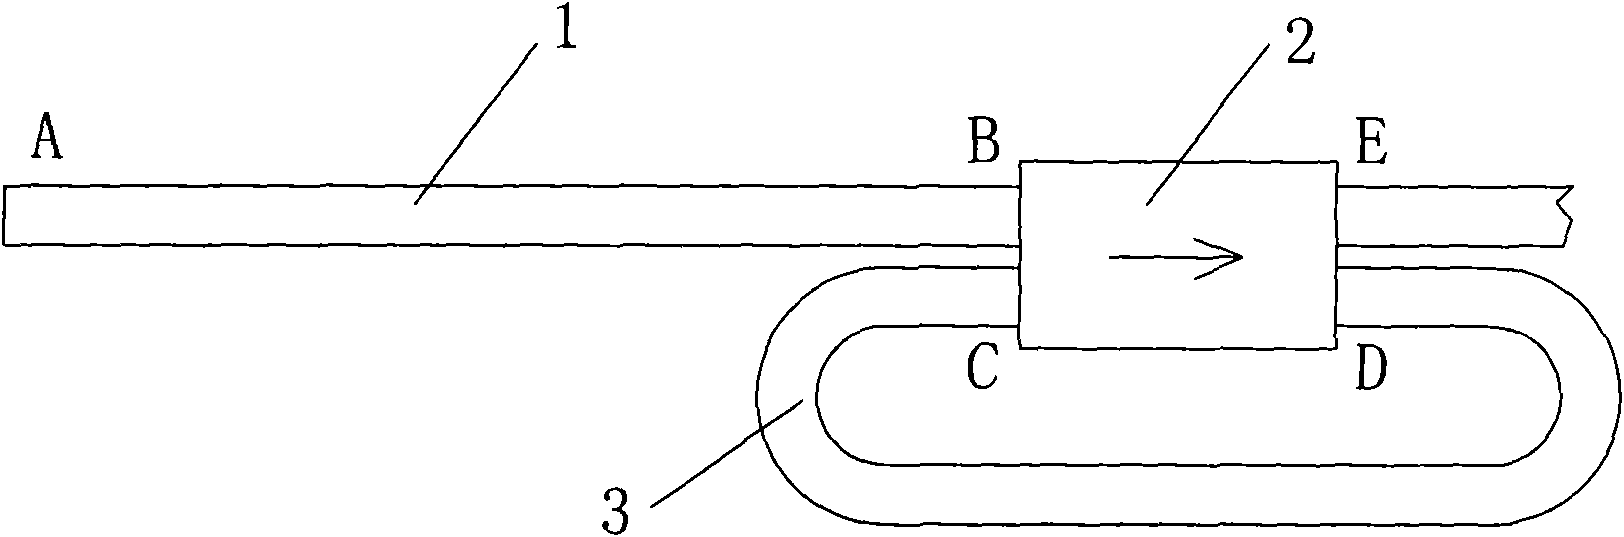 Single two-way throttling capillary tube